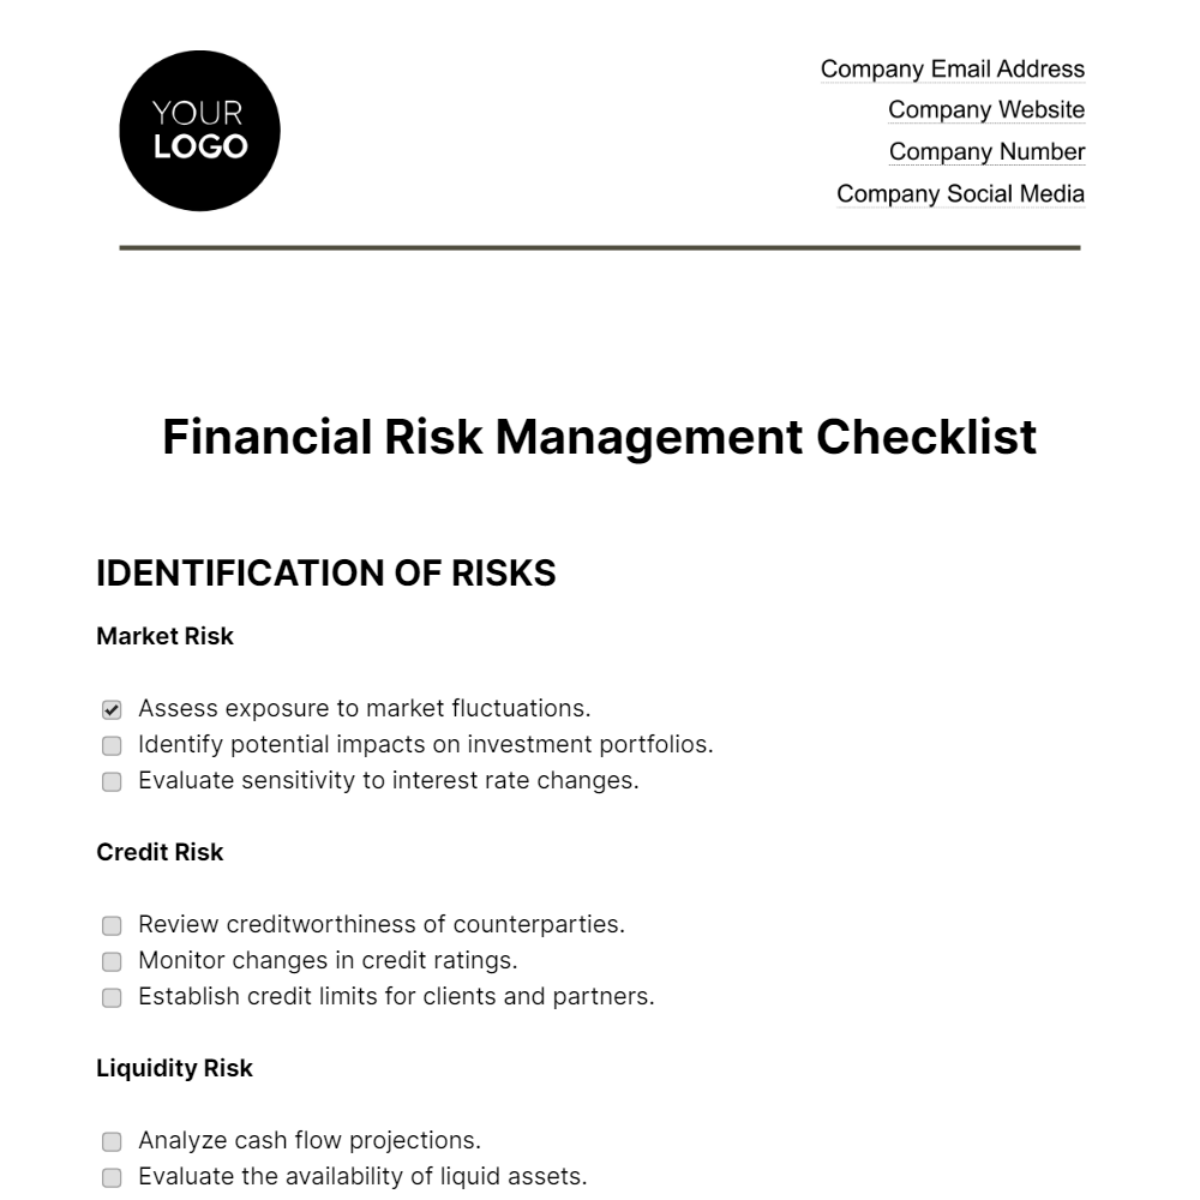 Financial Risk Management Checklist Template